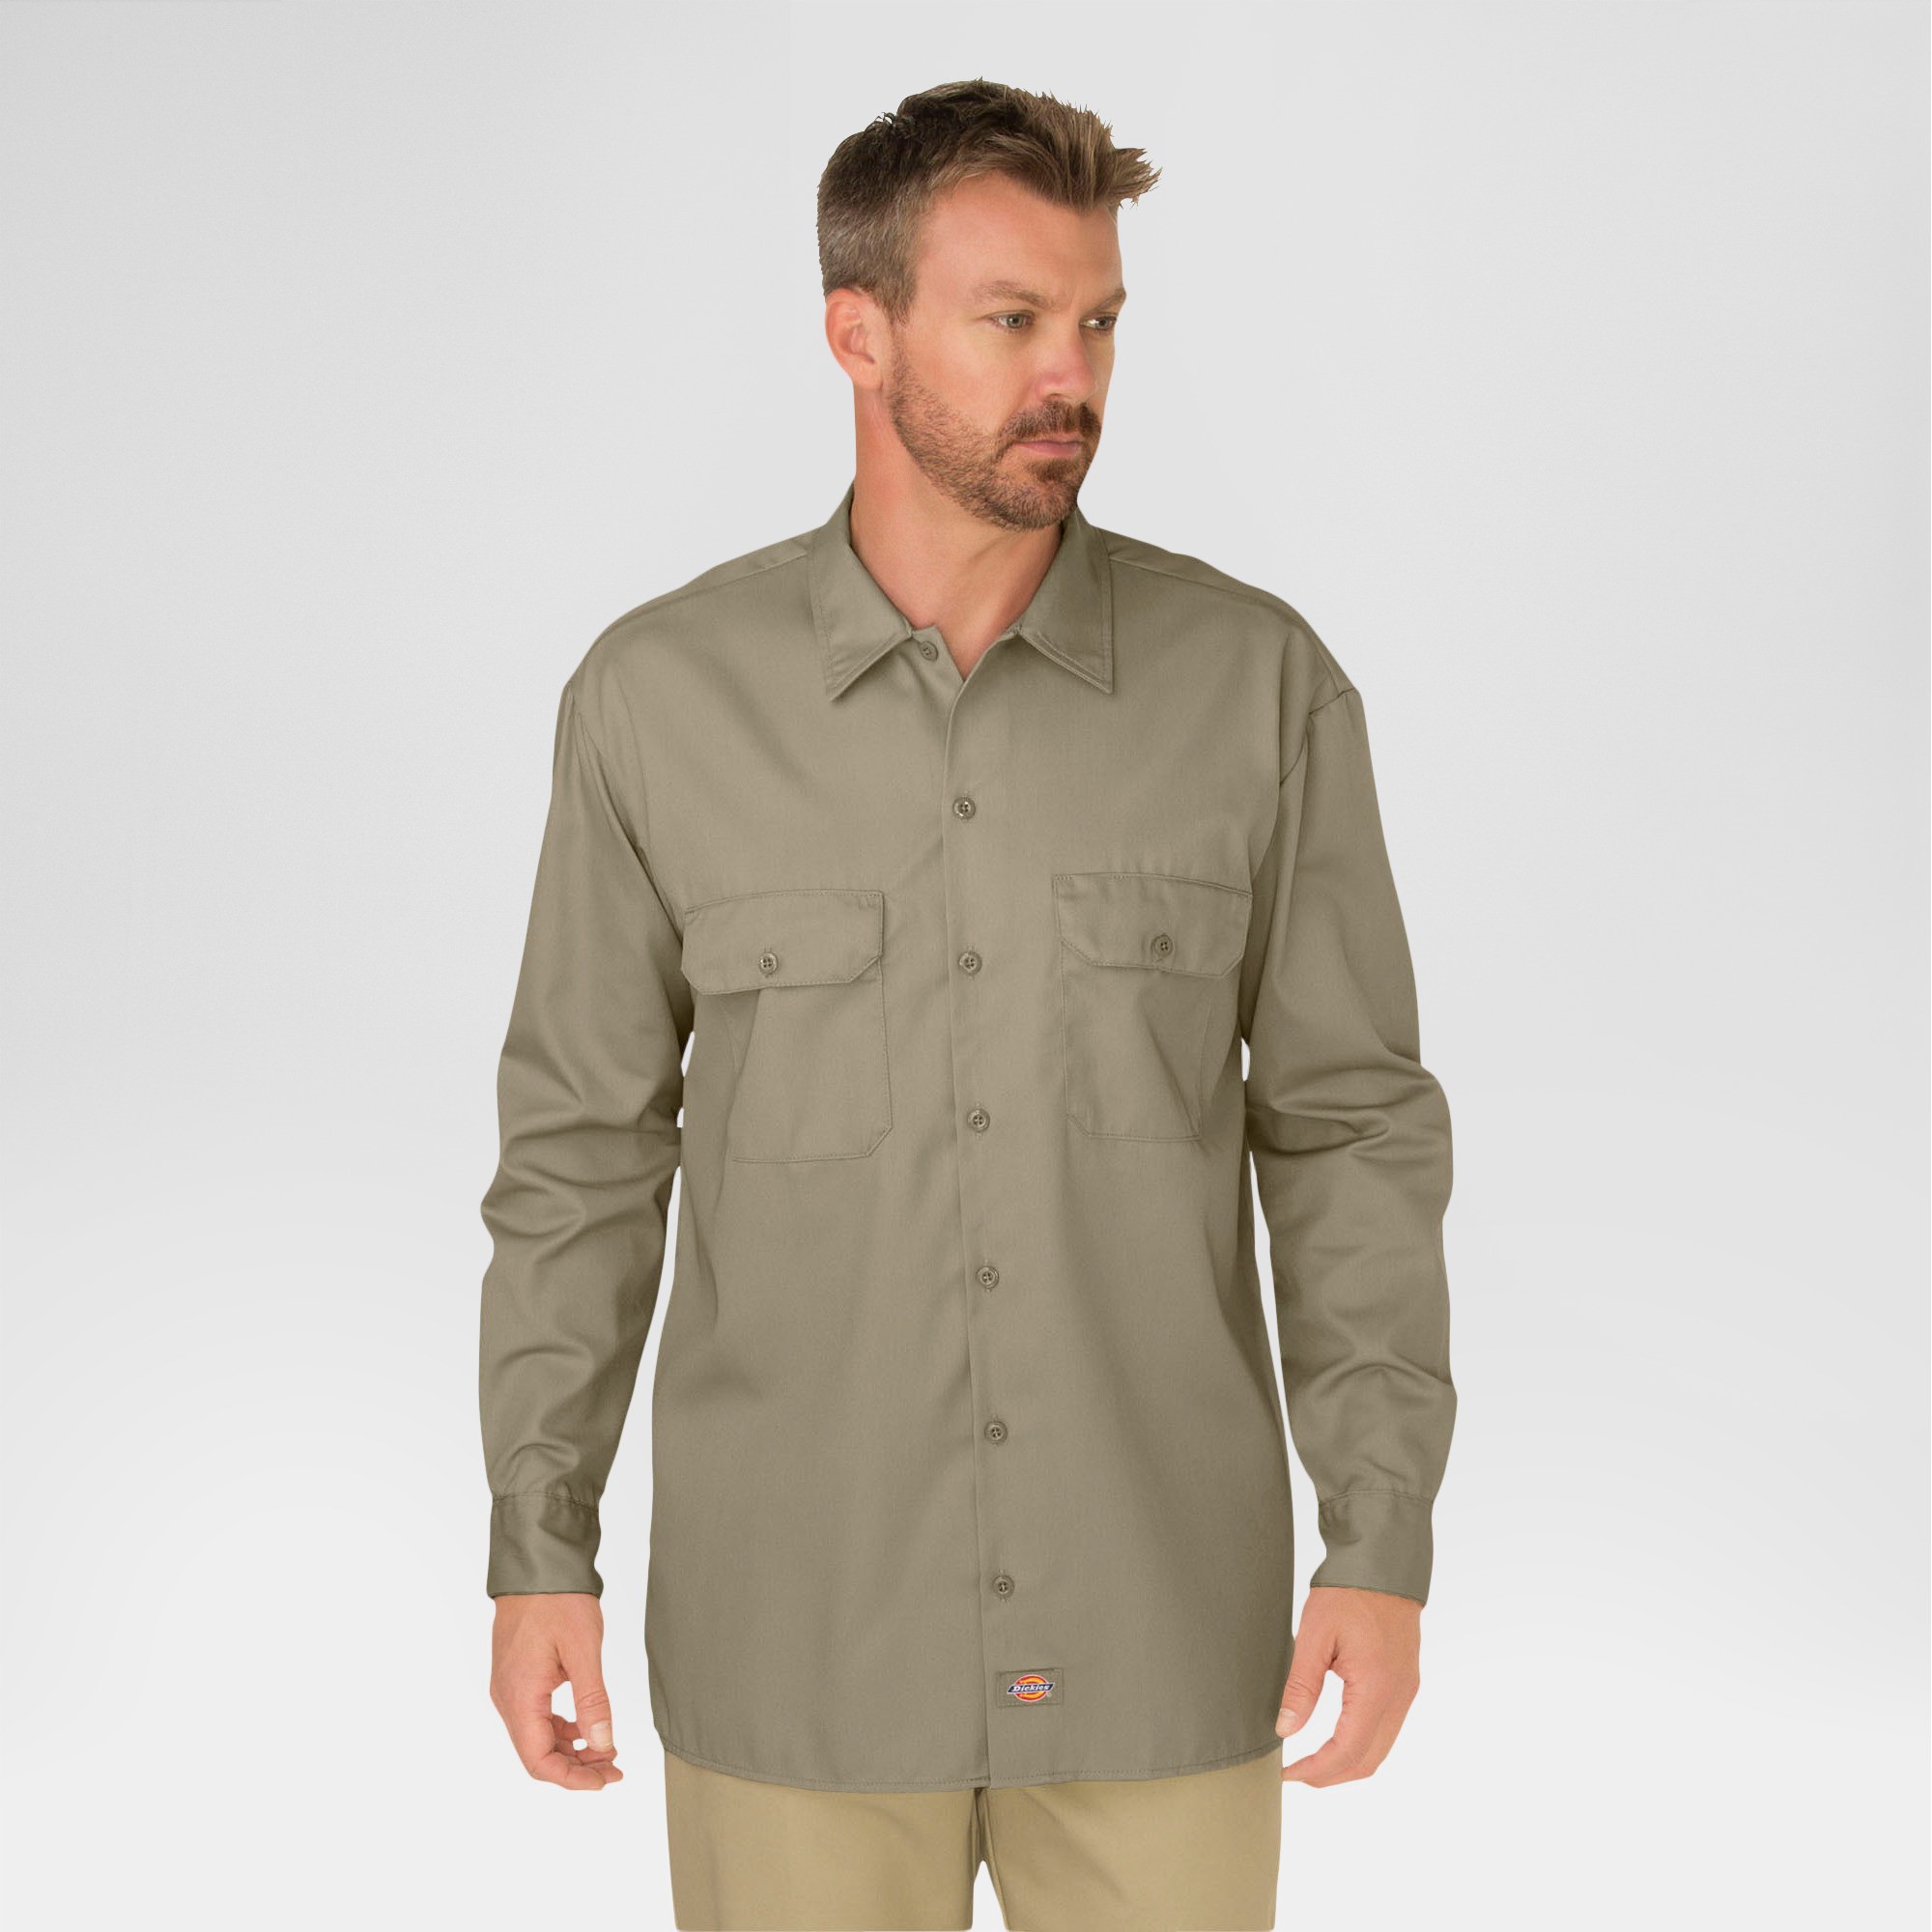 Dickies Men's Original Fit Twill Long Sleeve Shirt-Khaki XL, Green